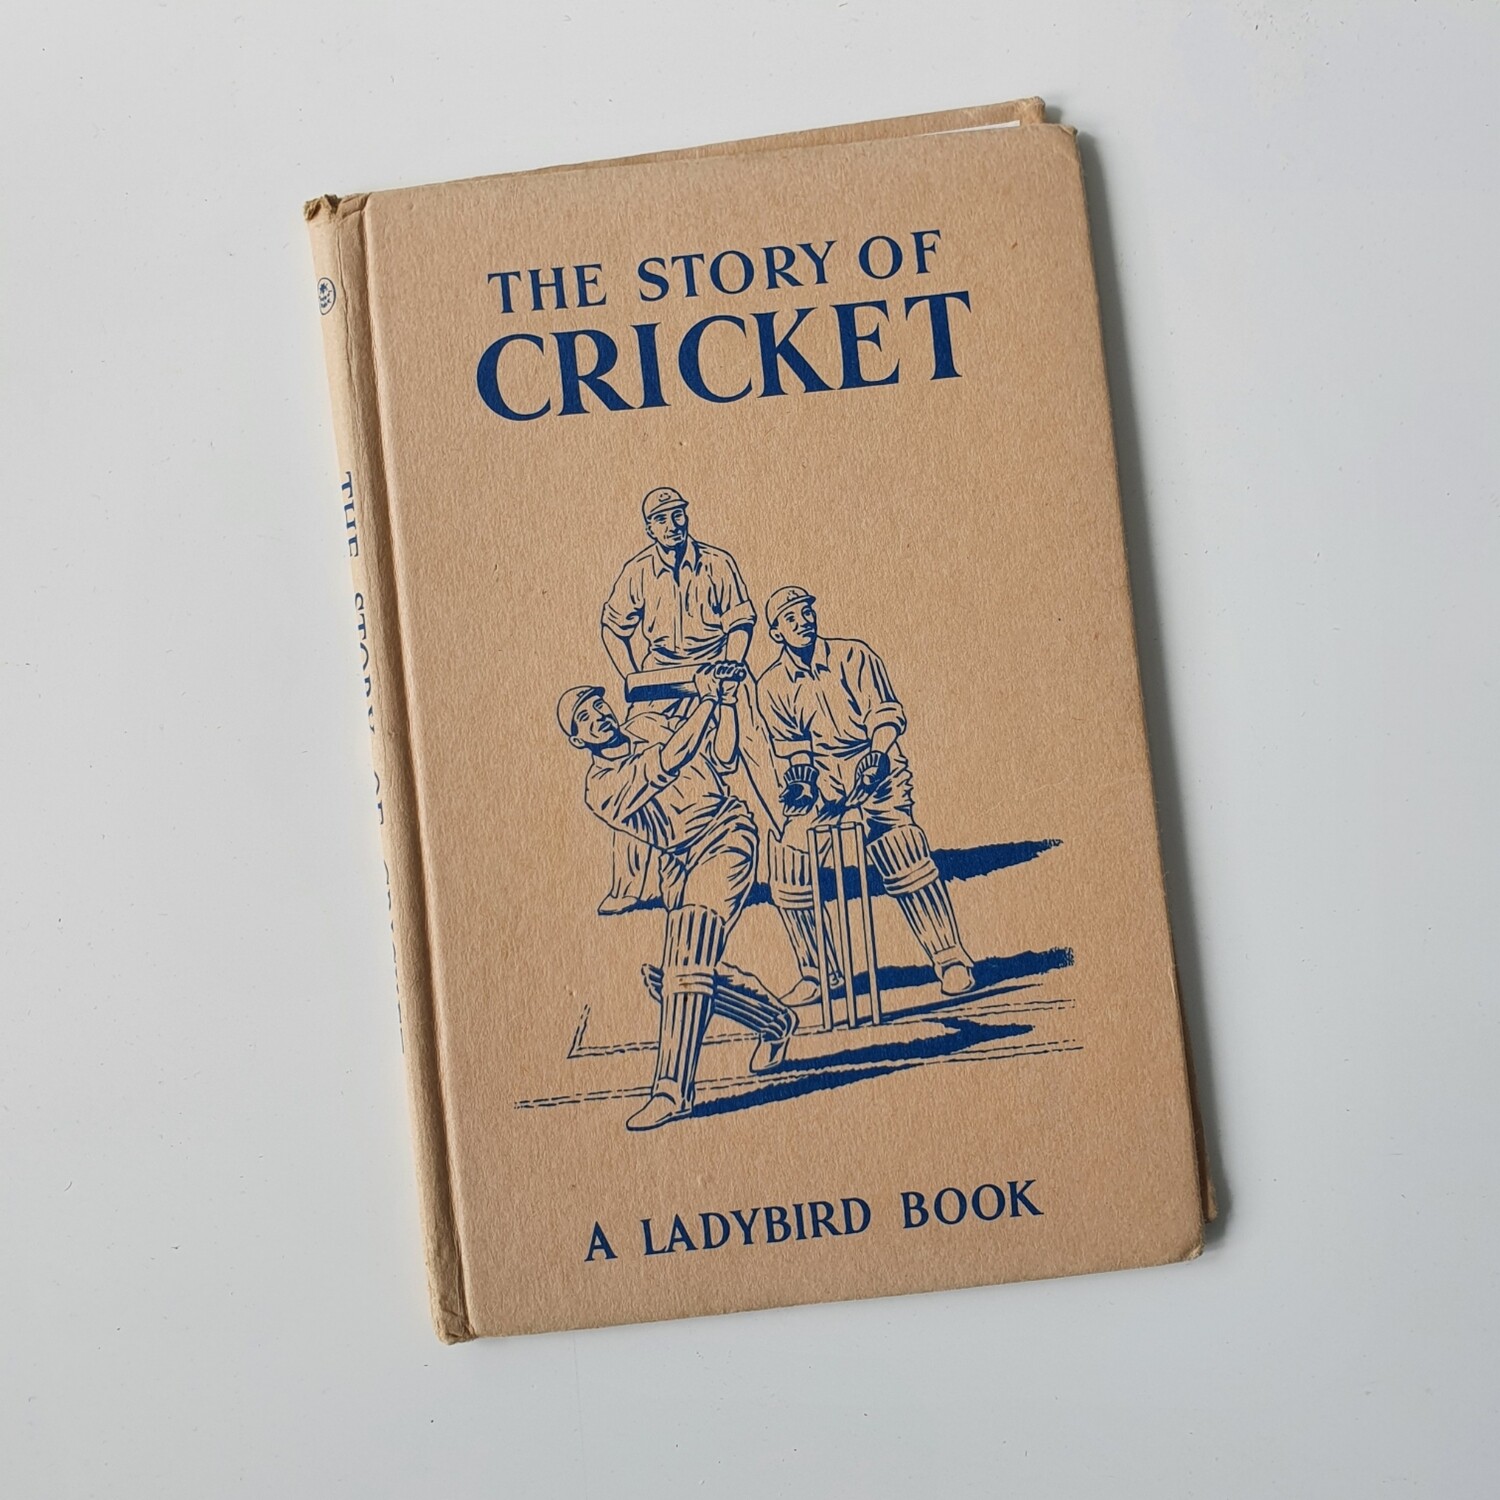 Cricket Notebook - Ladybird book - no original book pages